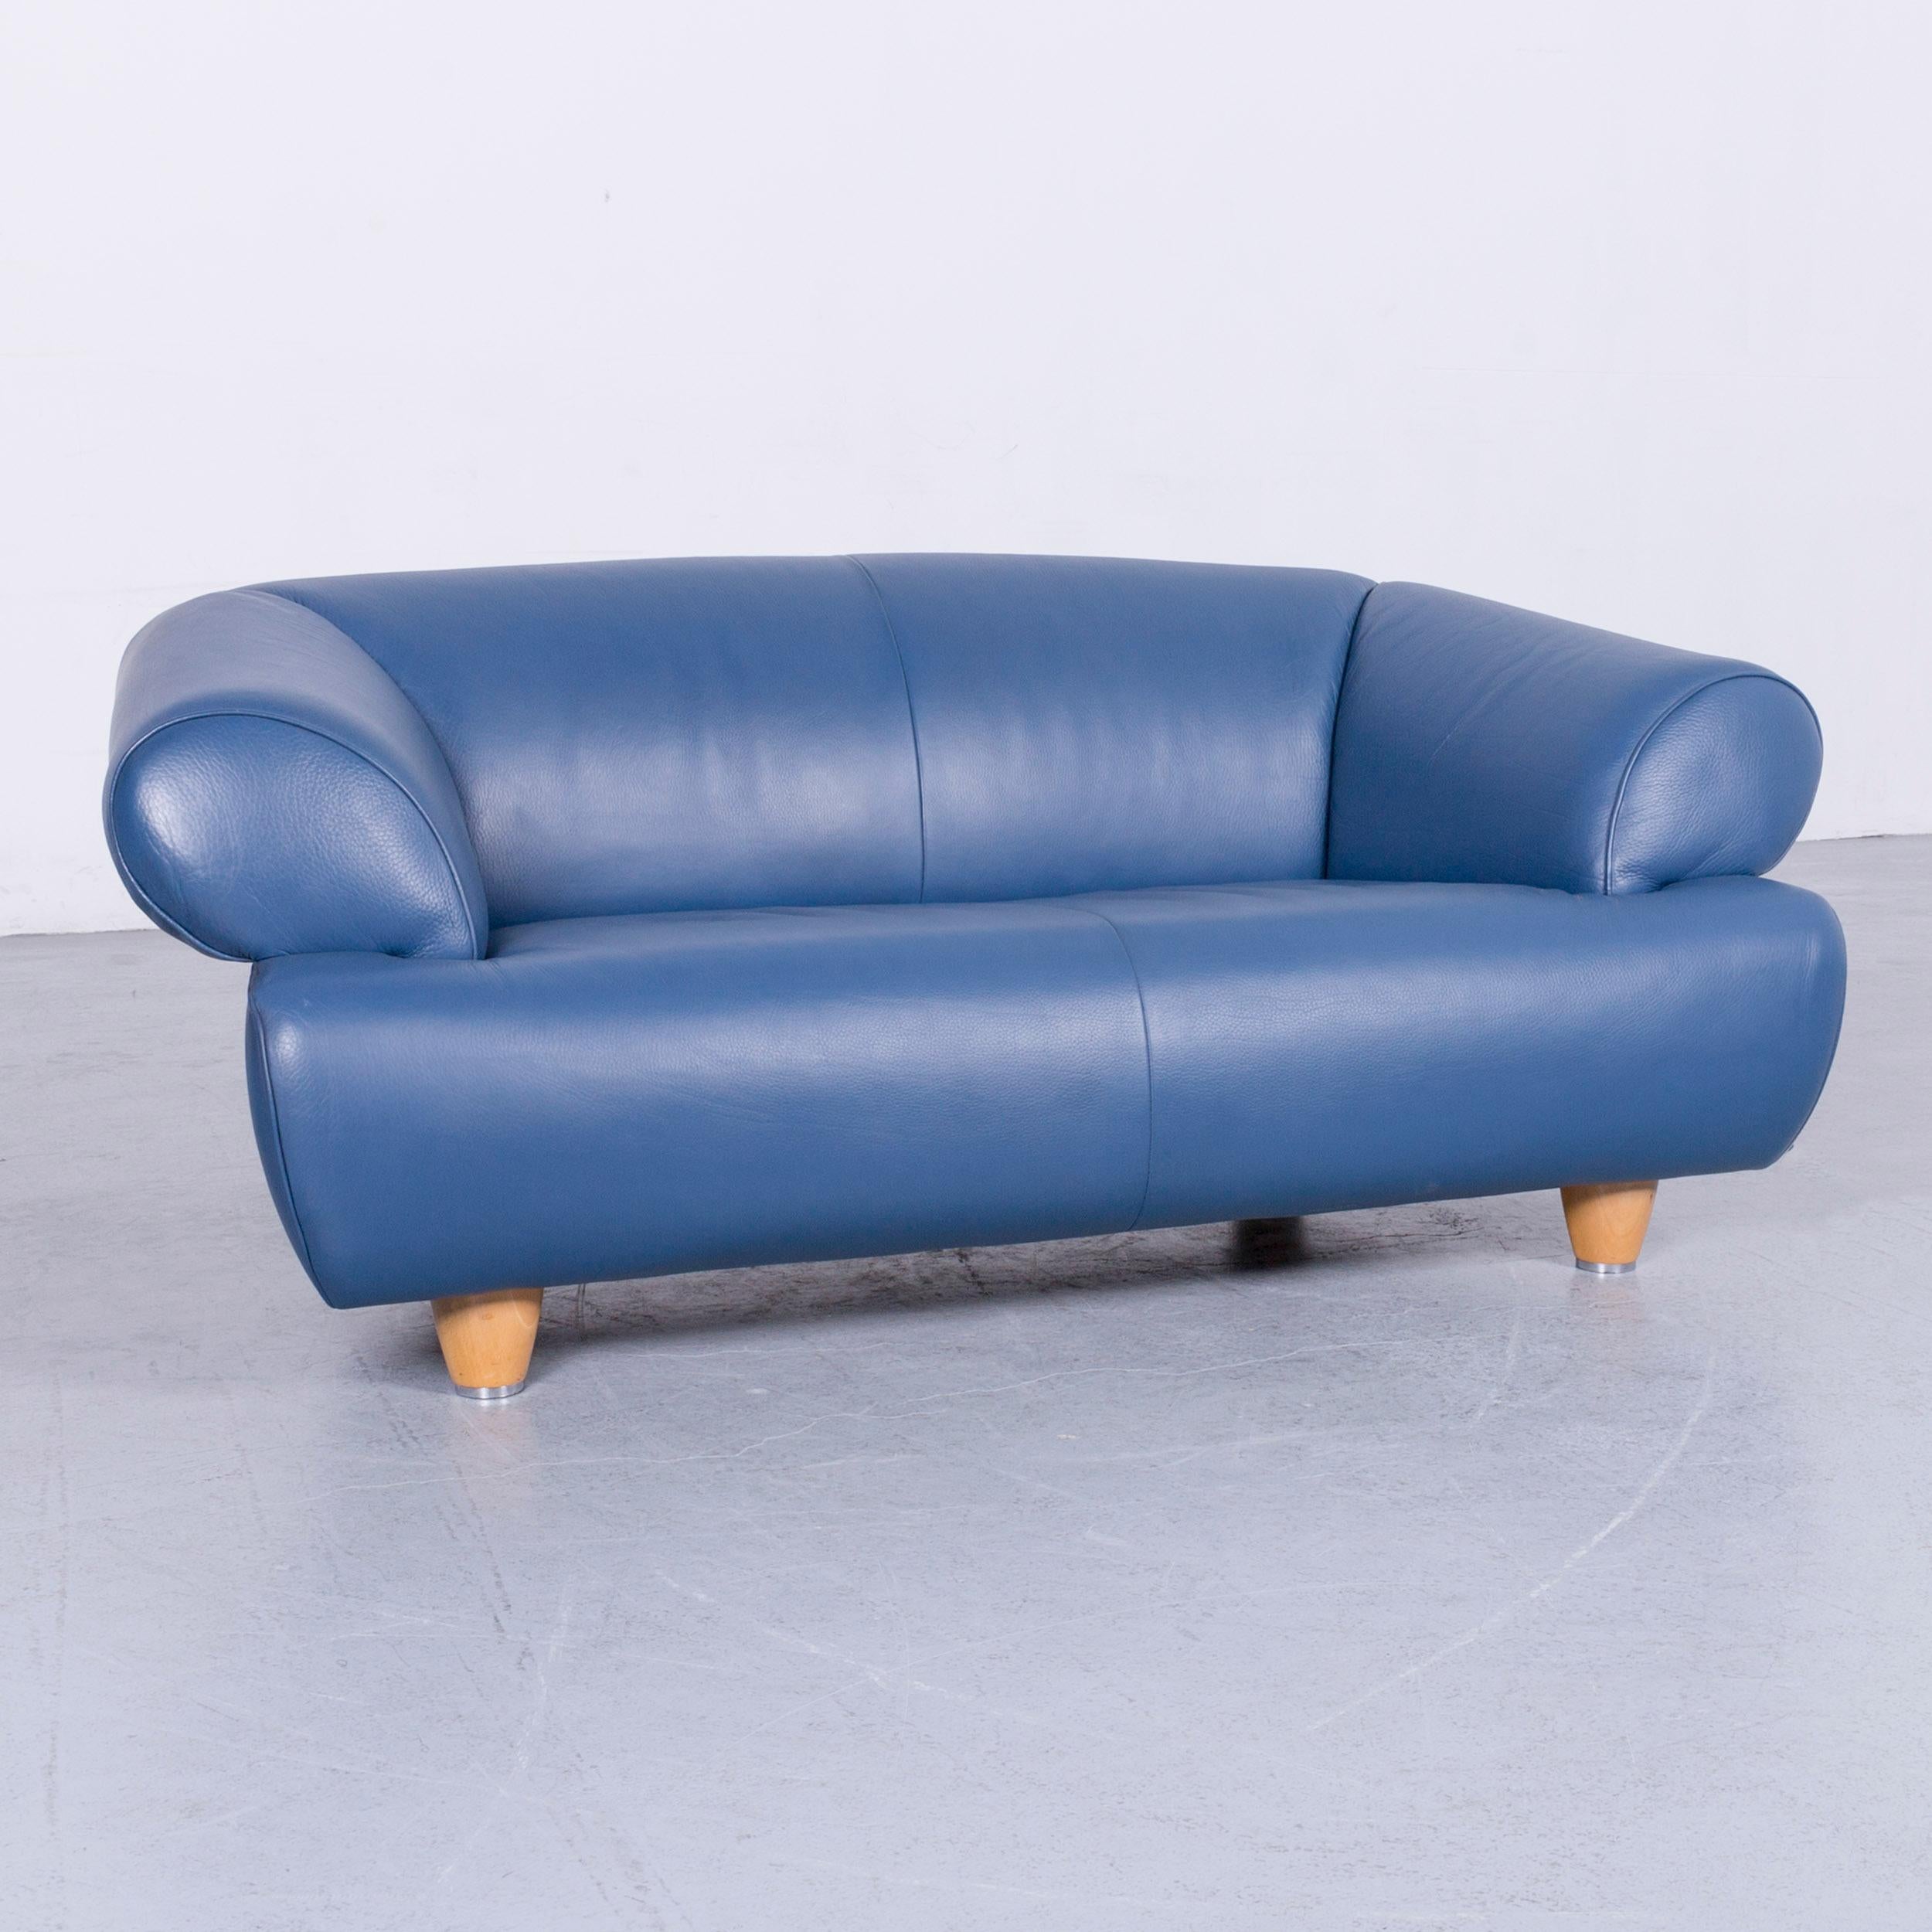 Blue colored original De Sede DS 91 designer leather sofa in a minimalistic and modern design, made for pure comfort.